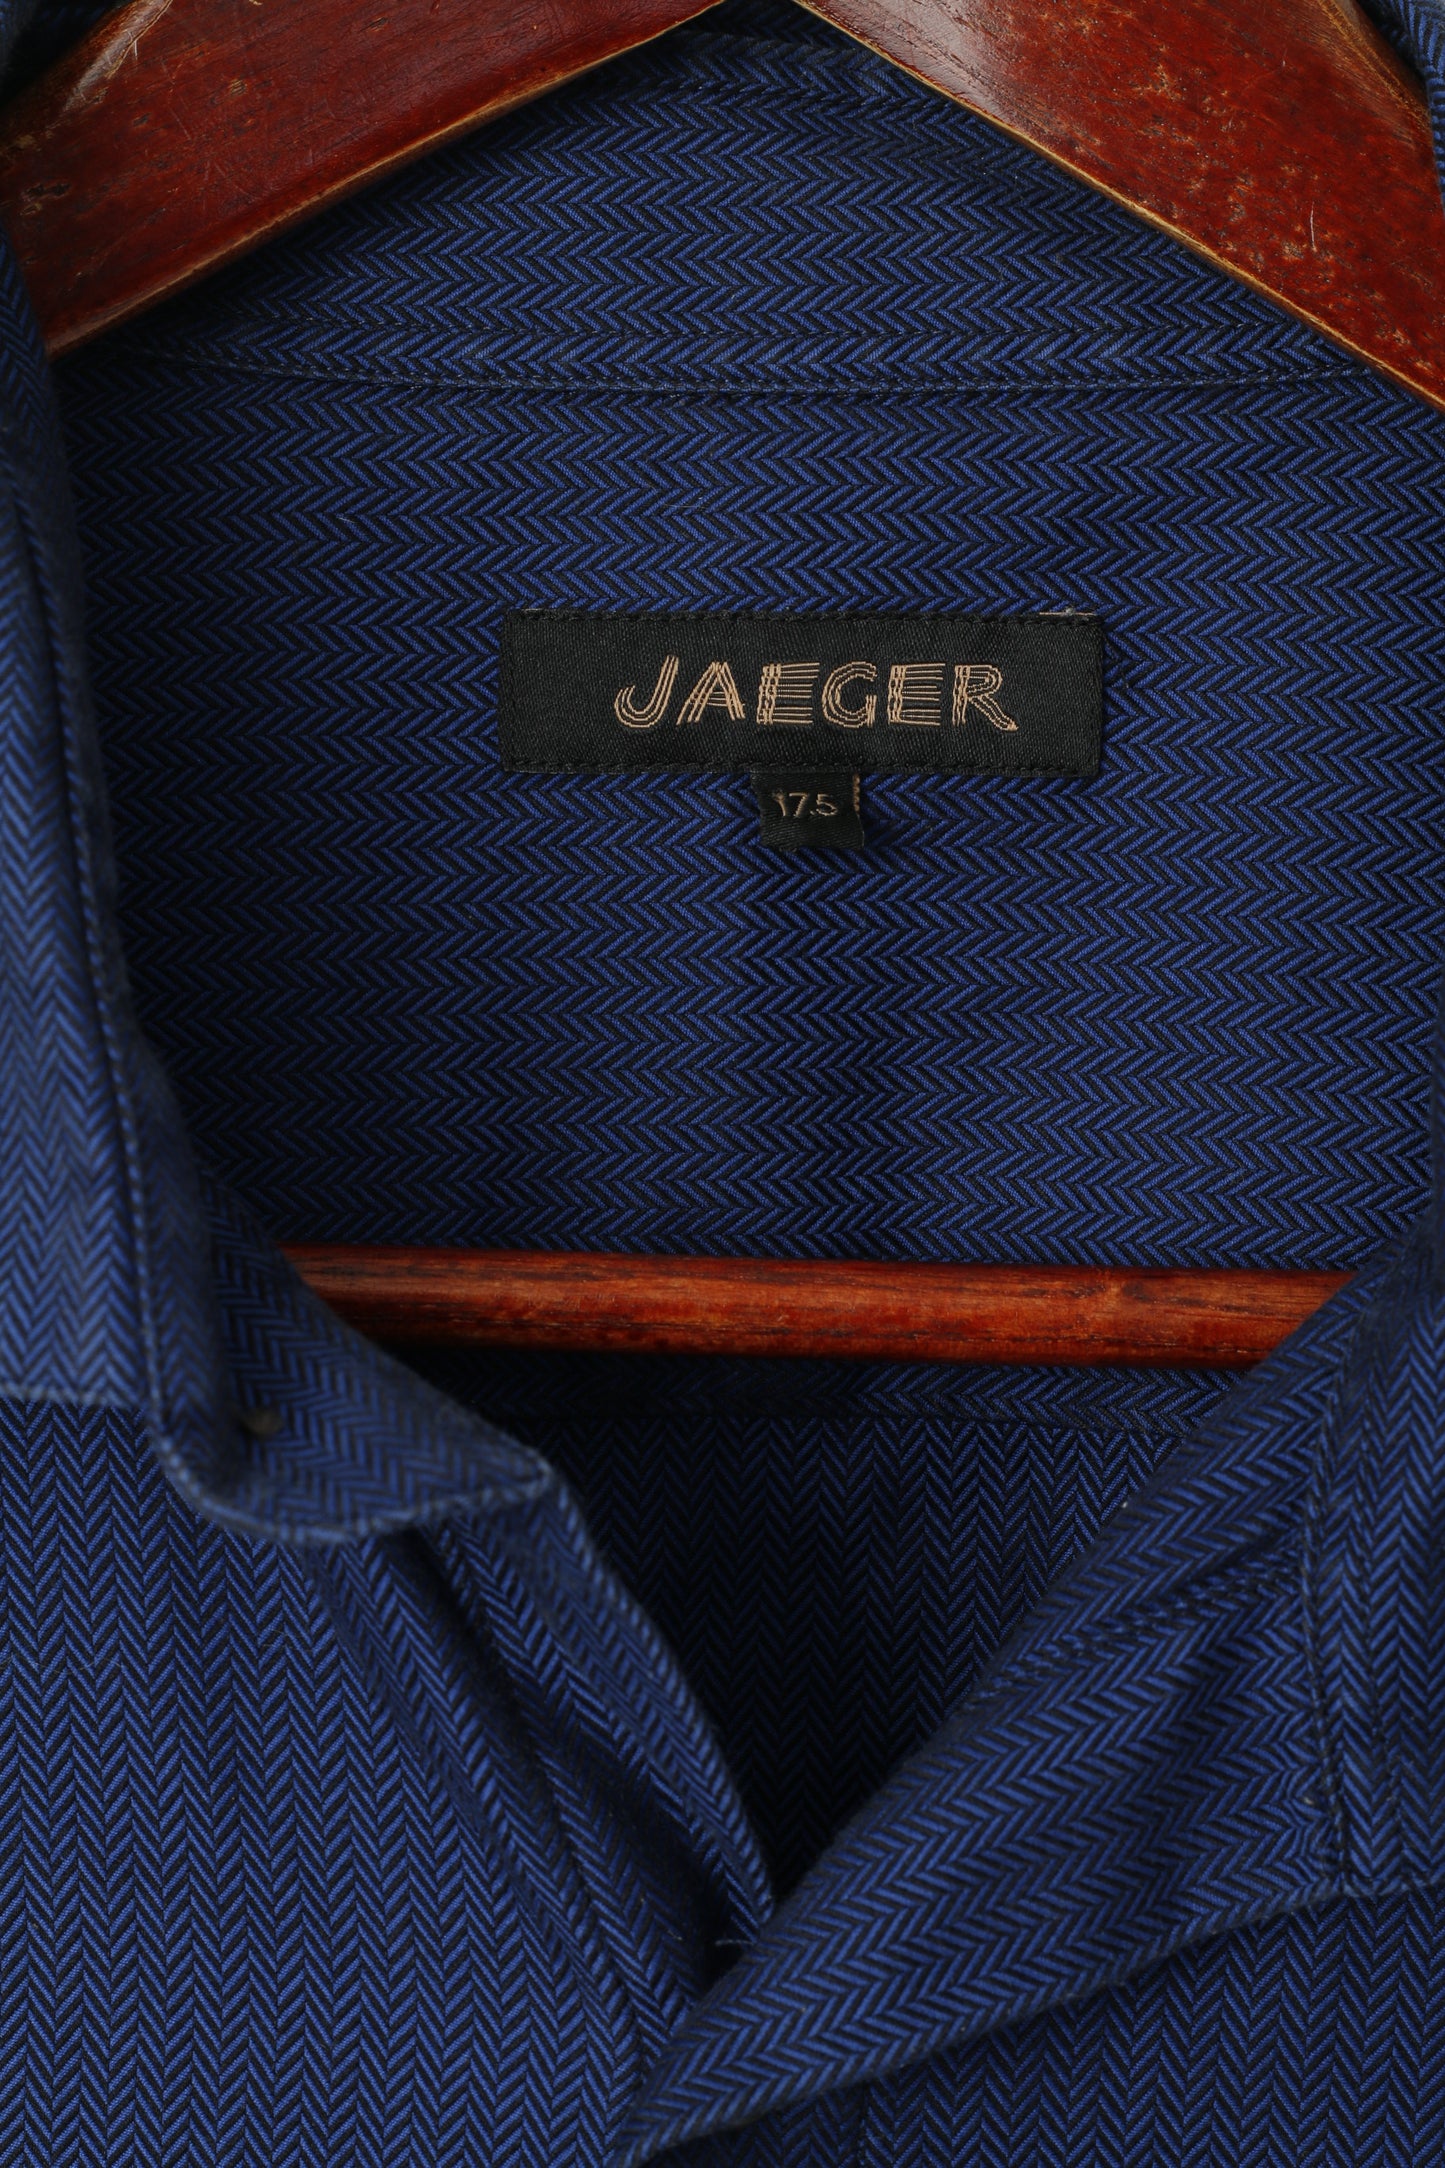 Jaeger Men 17.5 L Casual Shirt Navy Herringbone Cotton Long Sleeve Top